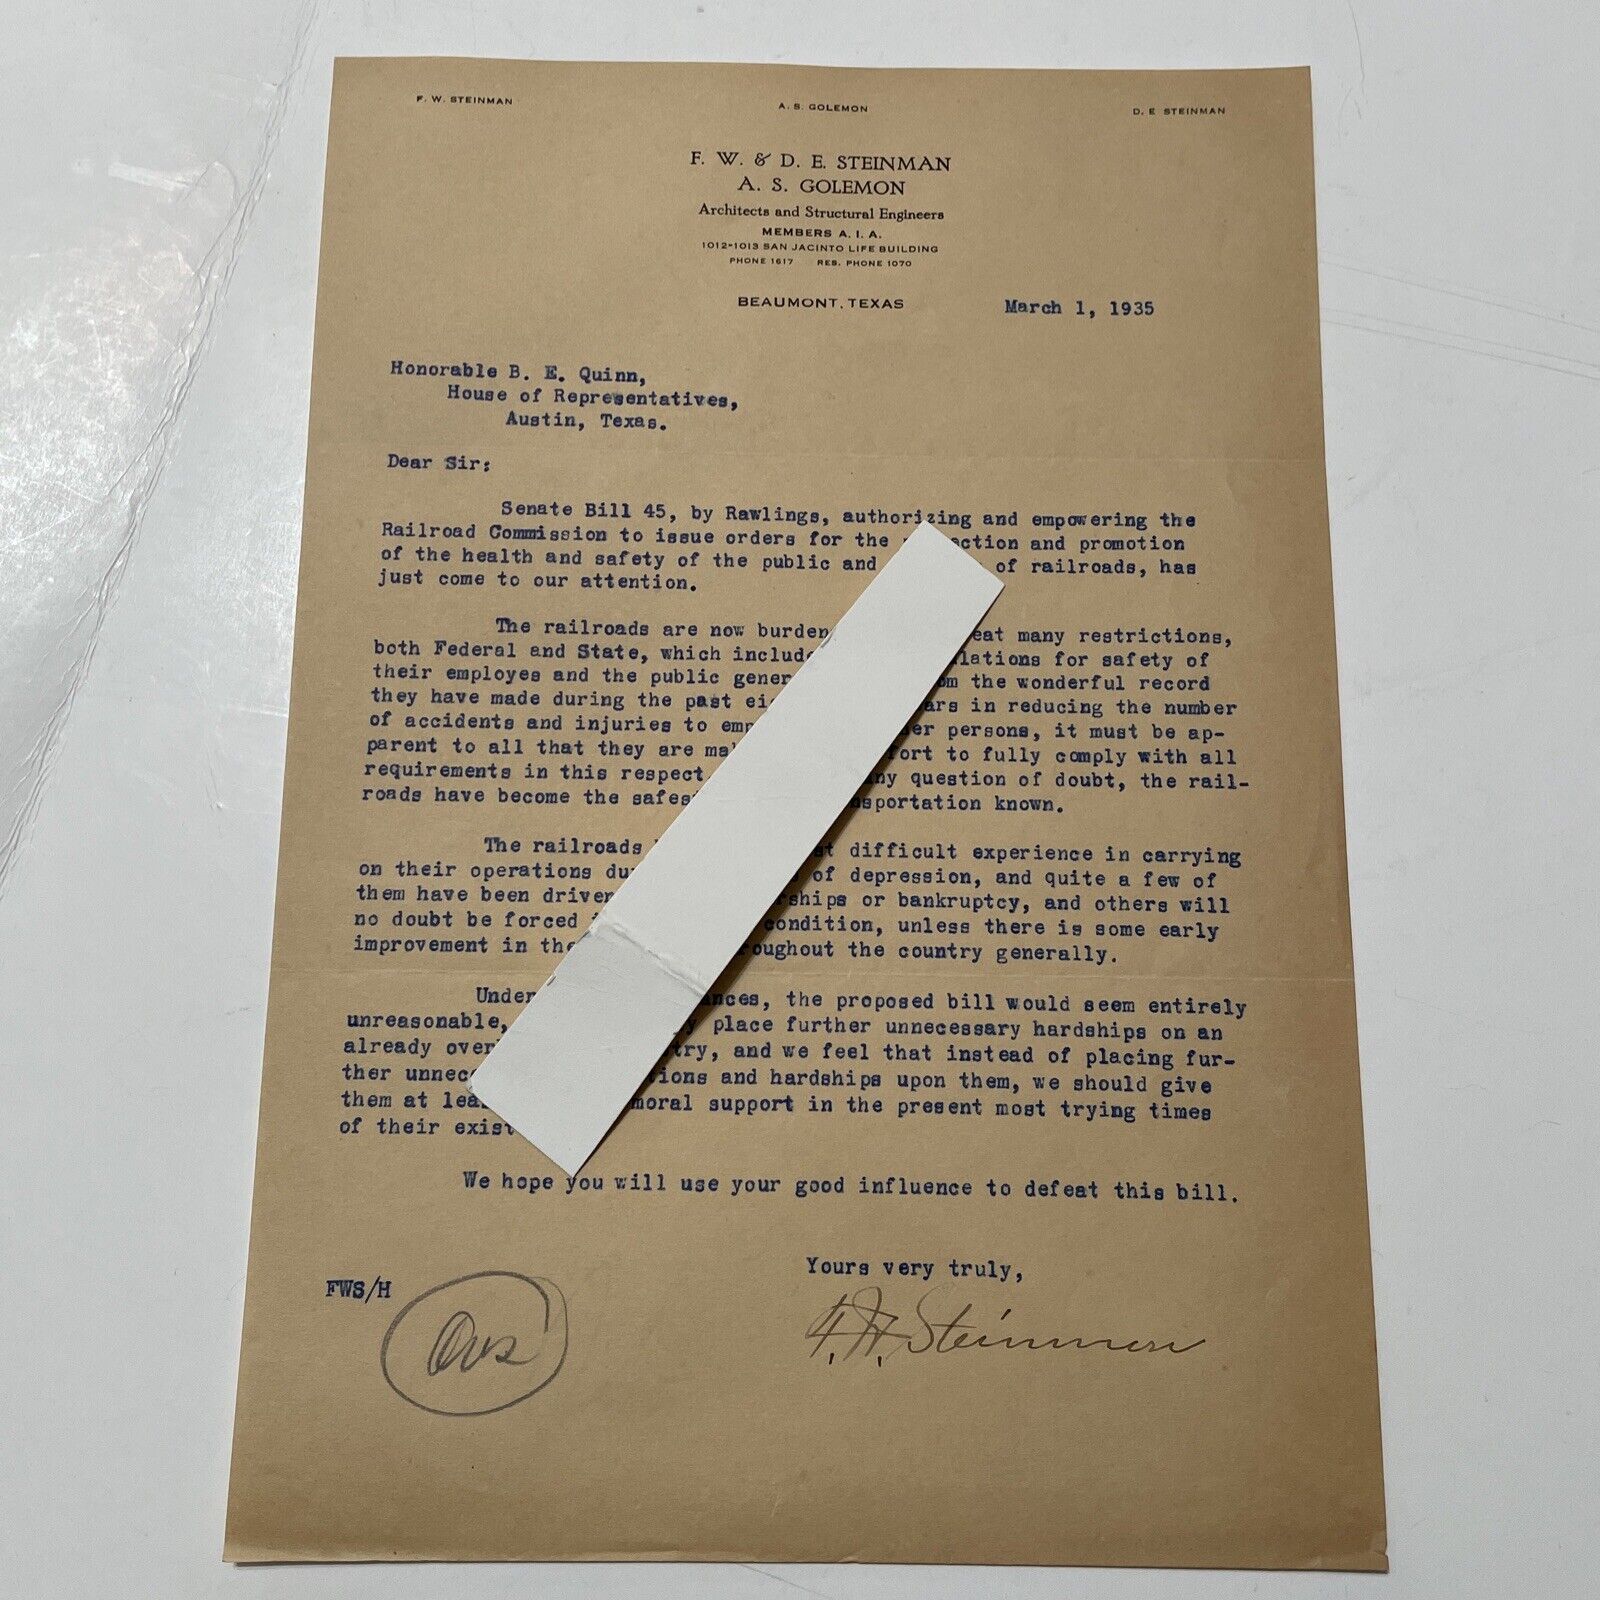 Beaumont Tx 1935 Antique Letter F. W. & D. E. Steinman Architects signed